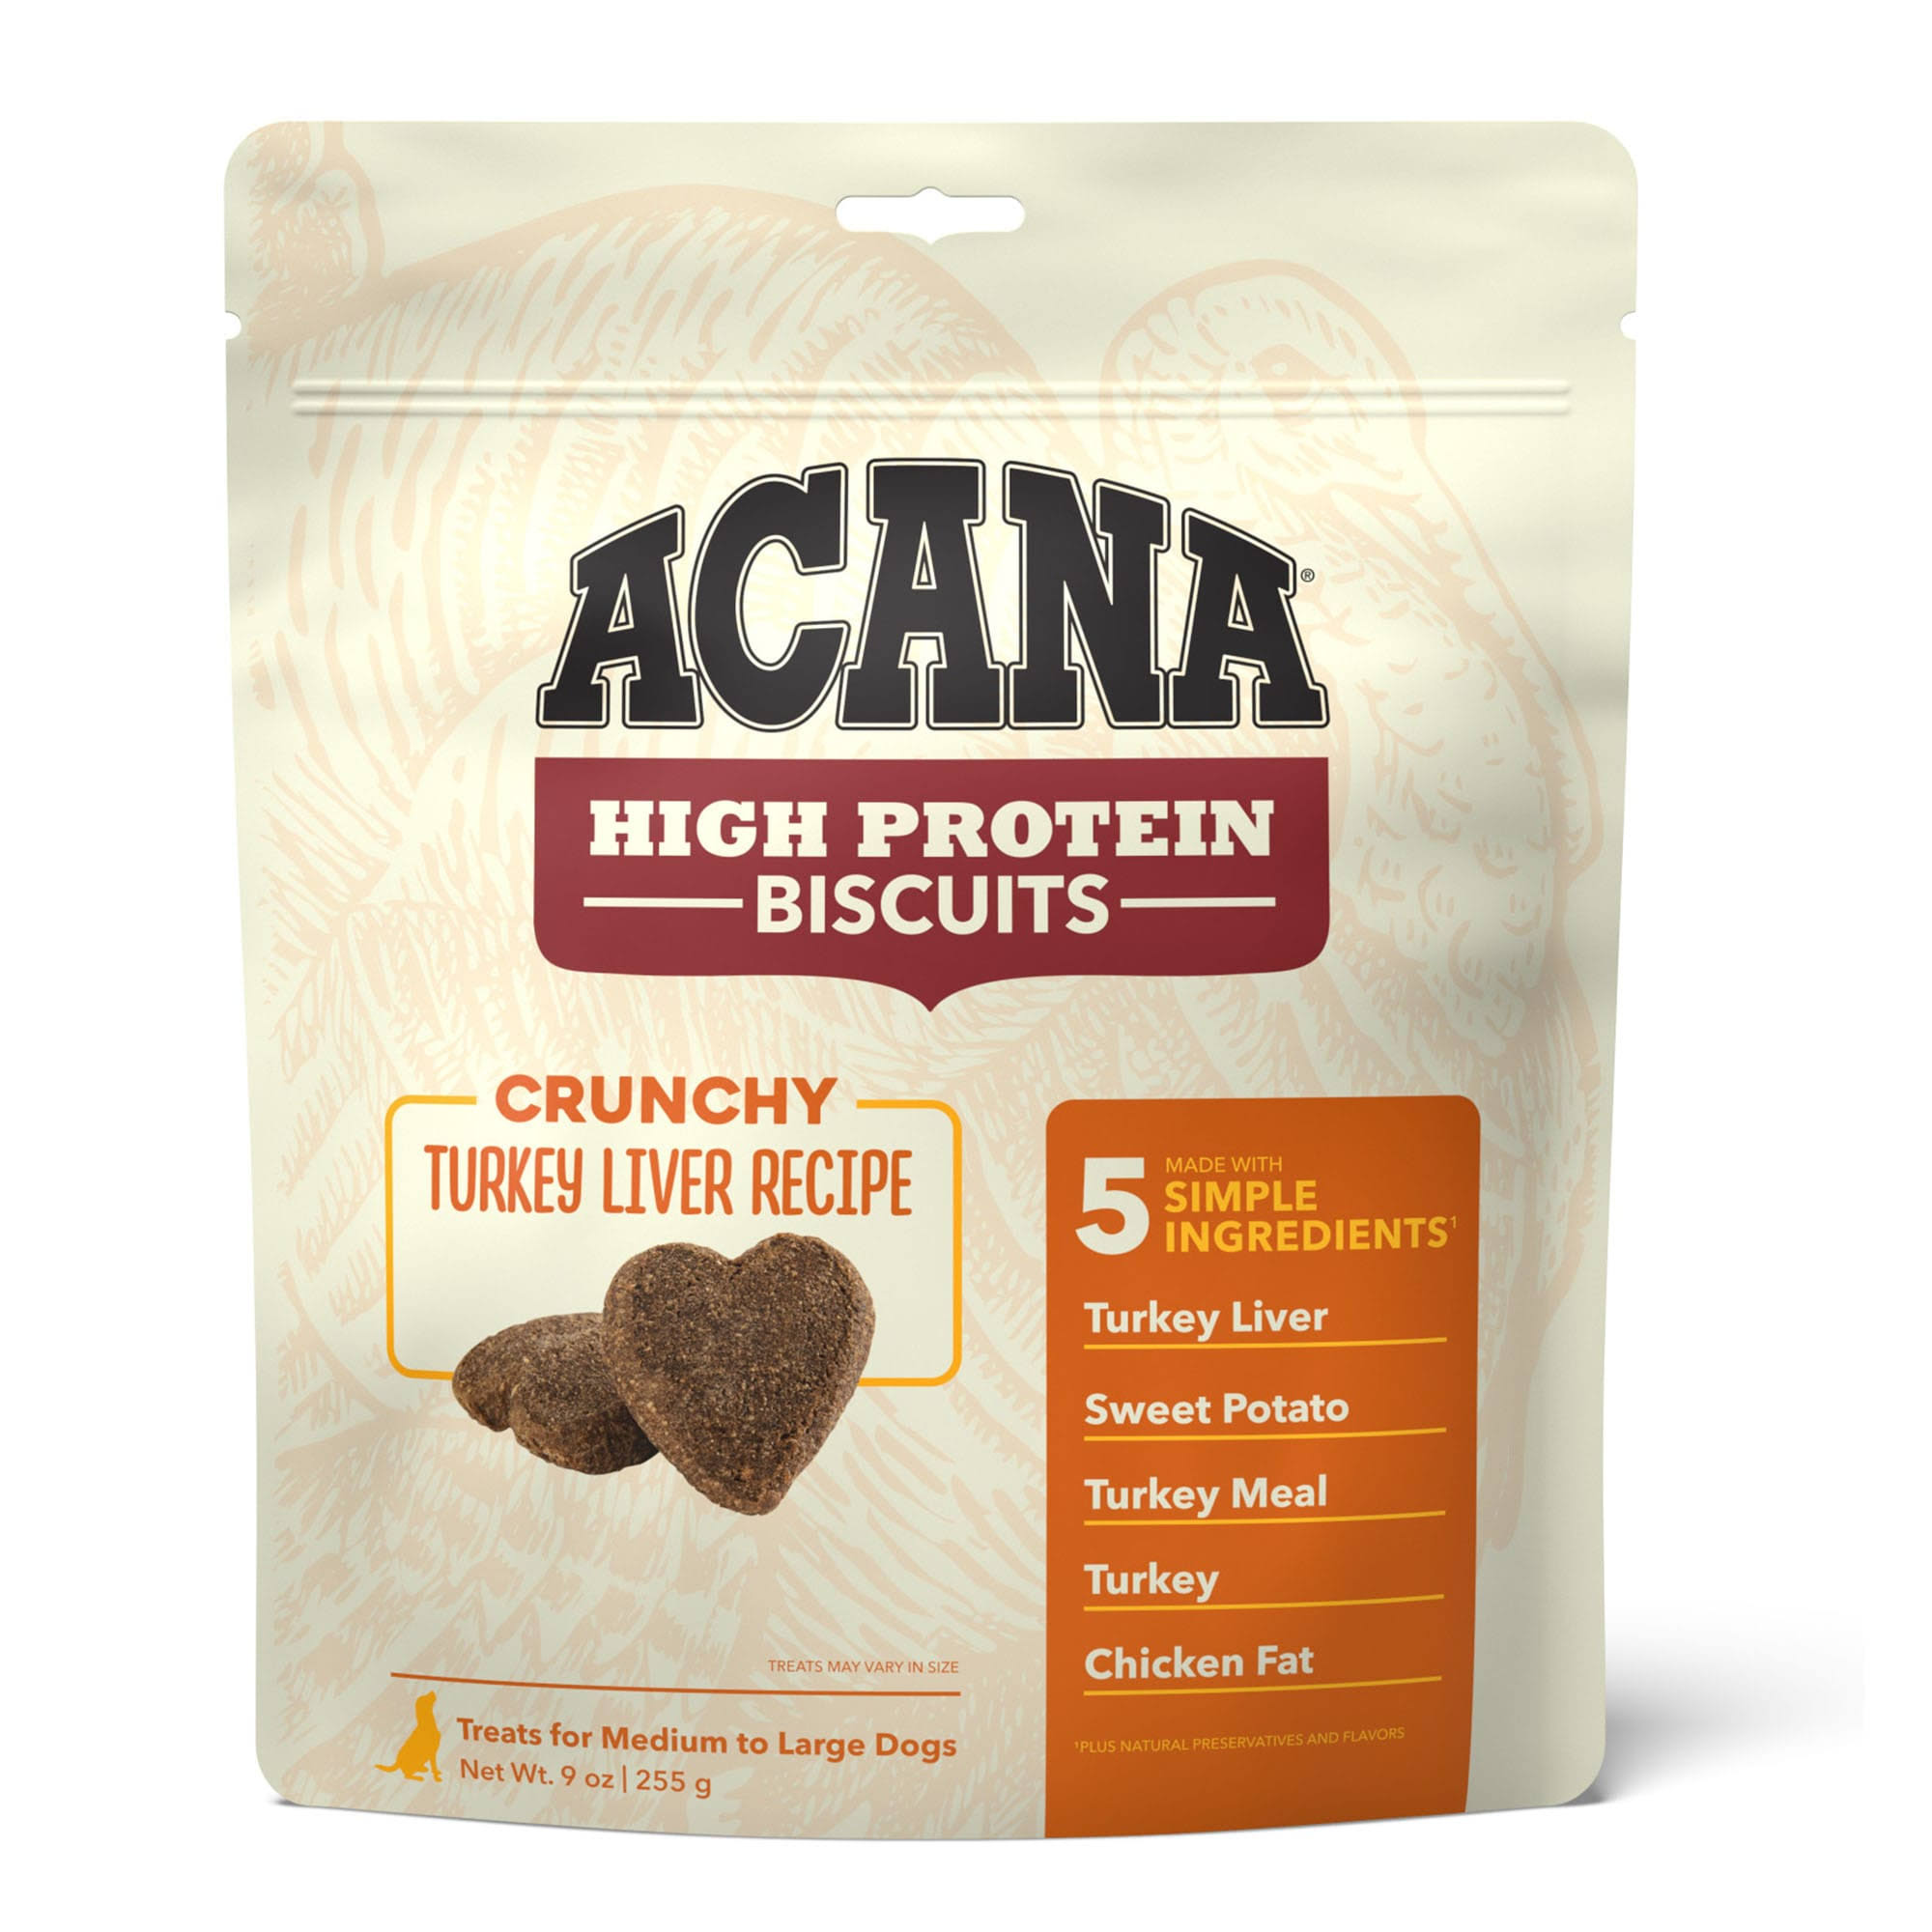 ACANA Crunchy Biscuits Dog, High Protein, Treats Turkey Liver Recipe, Large - 9 oz